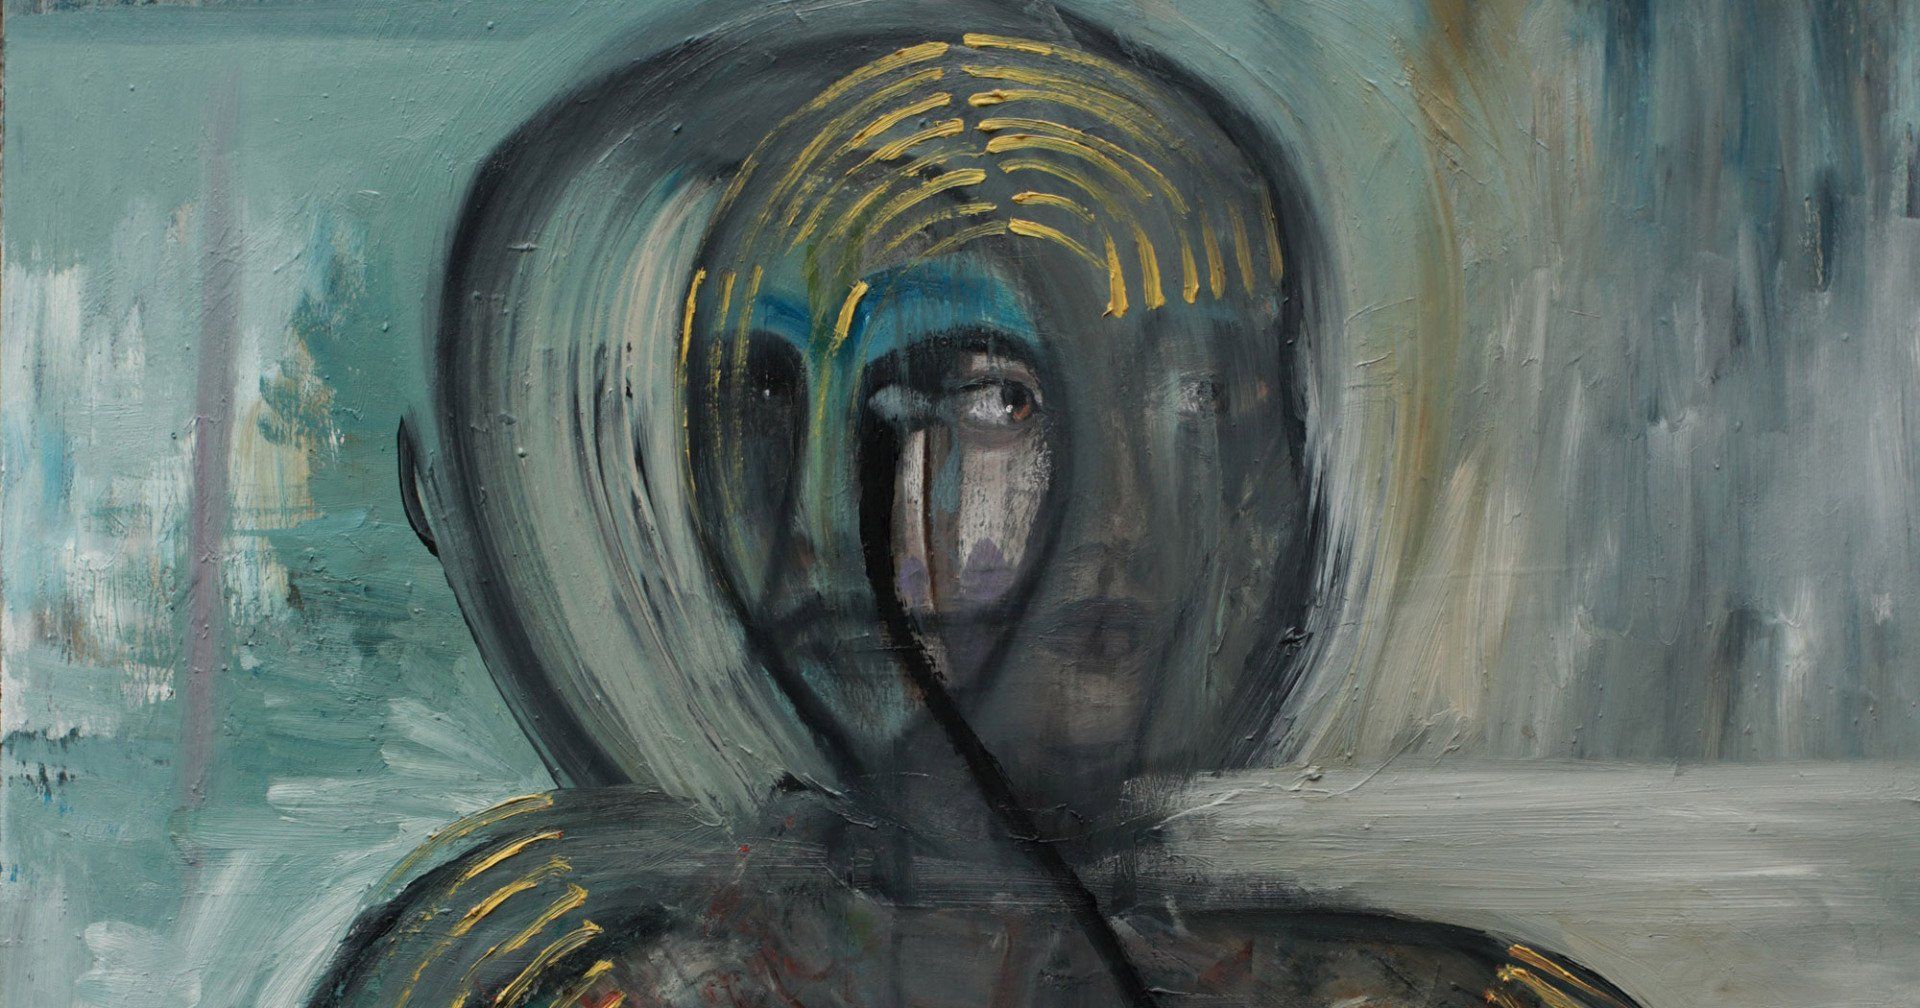 „Face Behind The Face No. 6“ by Sebastian Bieniek (B1EN1EK), 2017. Oil on canvas, 90 cm. x 90 cm. Painting from the 